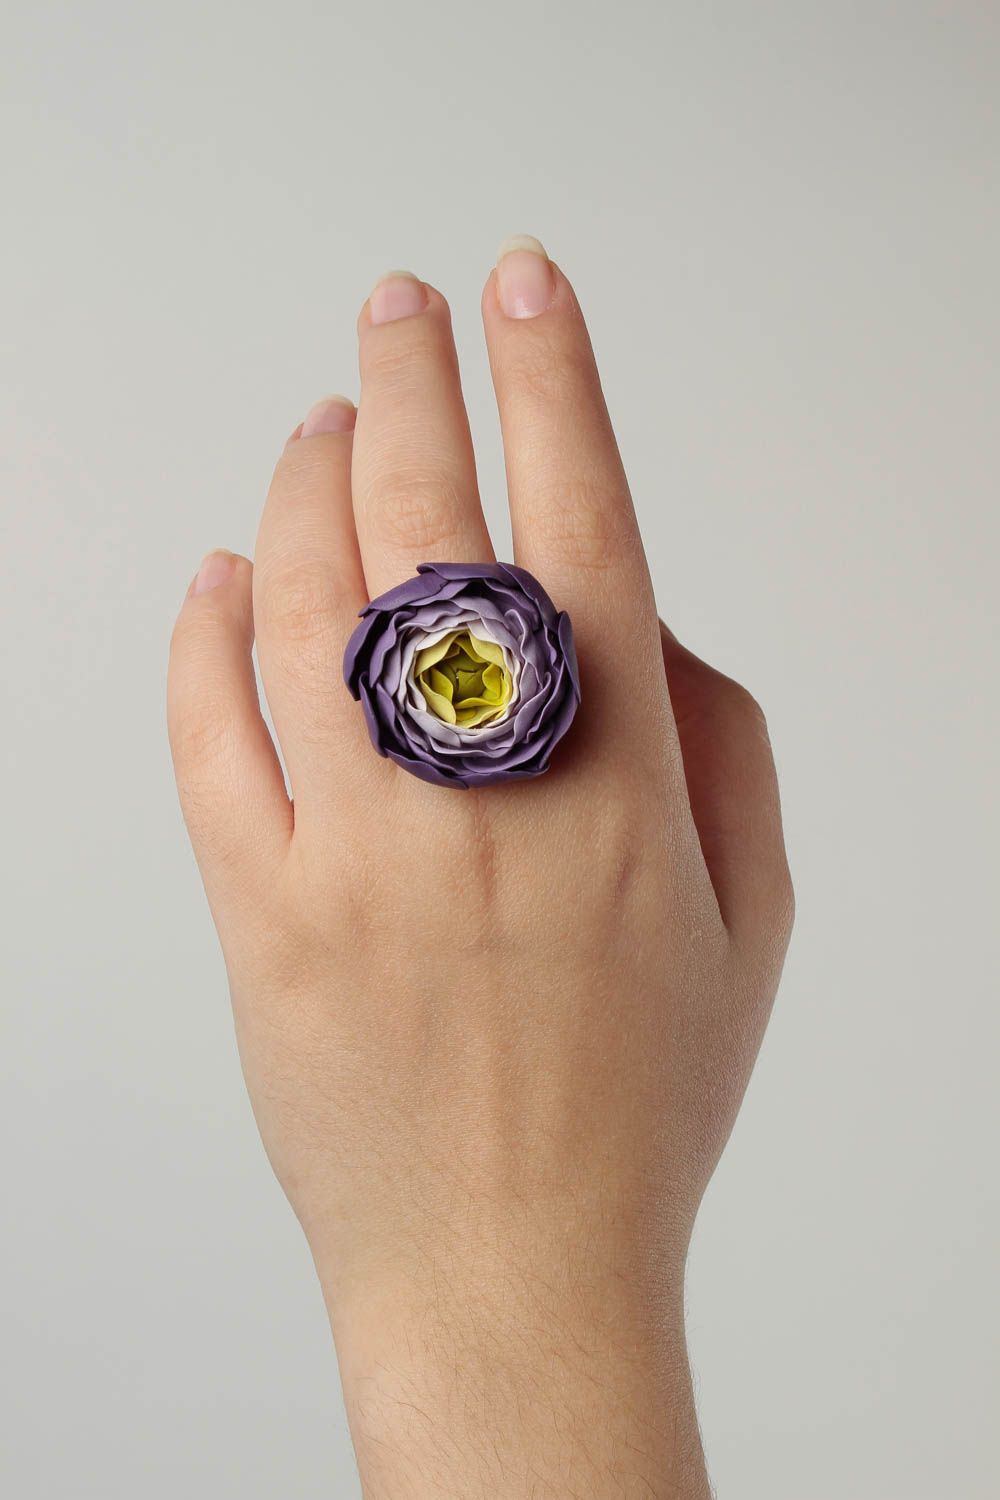 Stylish handmade plastic ring cool jewelry designs artisan jewelry for girls photo 1